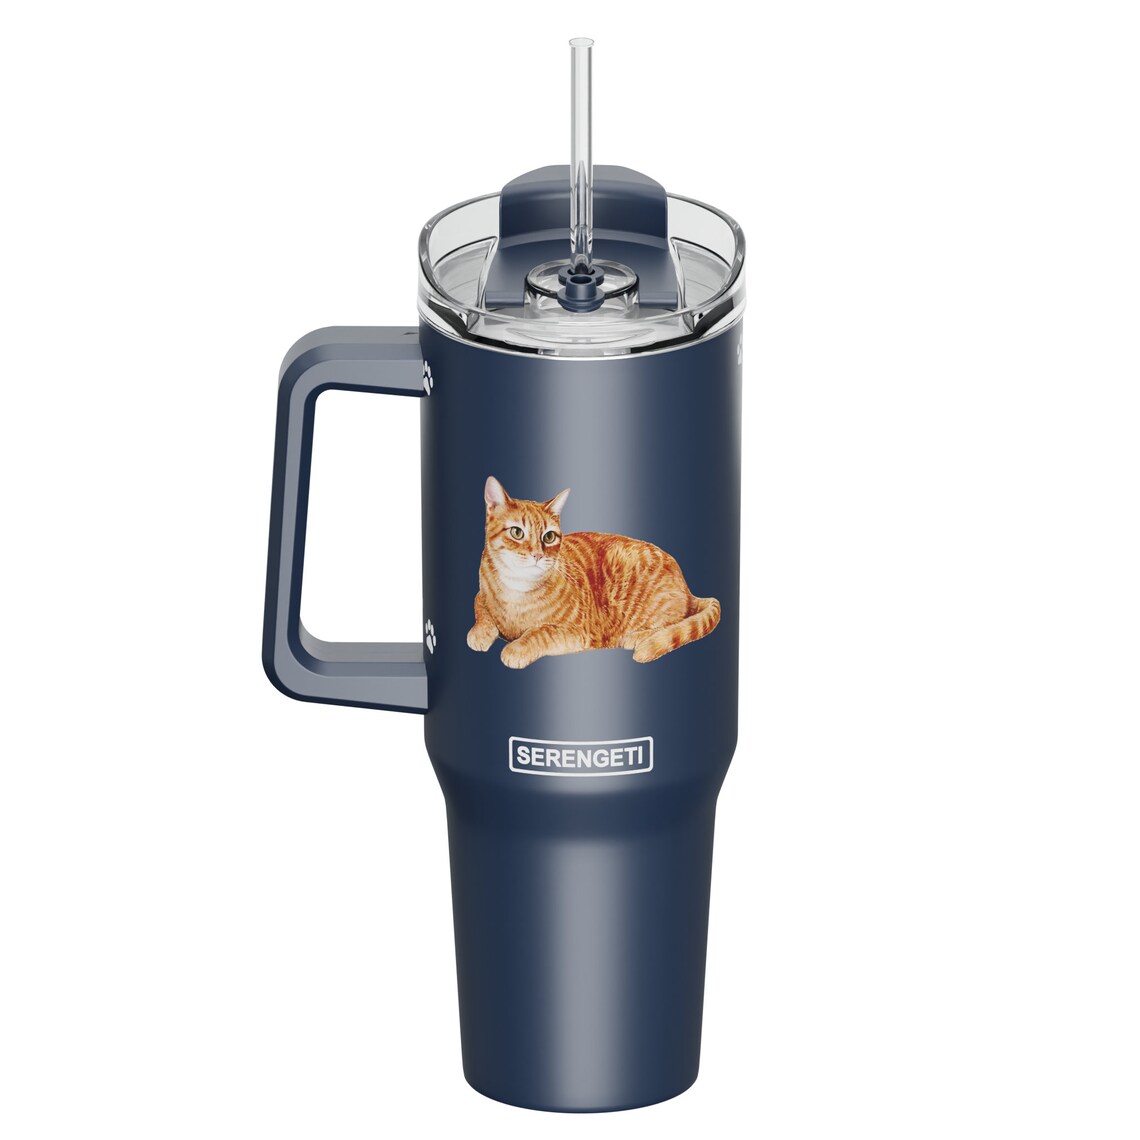 SERENGETI Stainless Steel Mug 40oz - Tabby Orange Cat